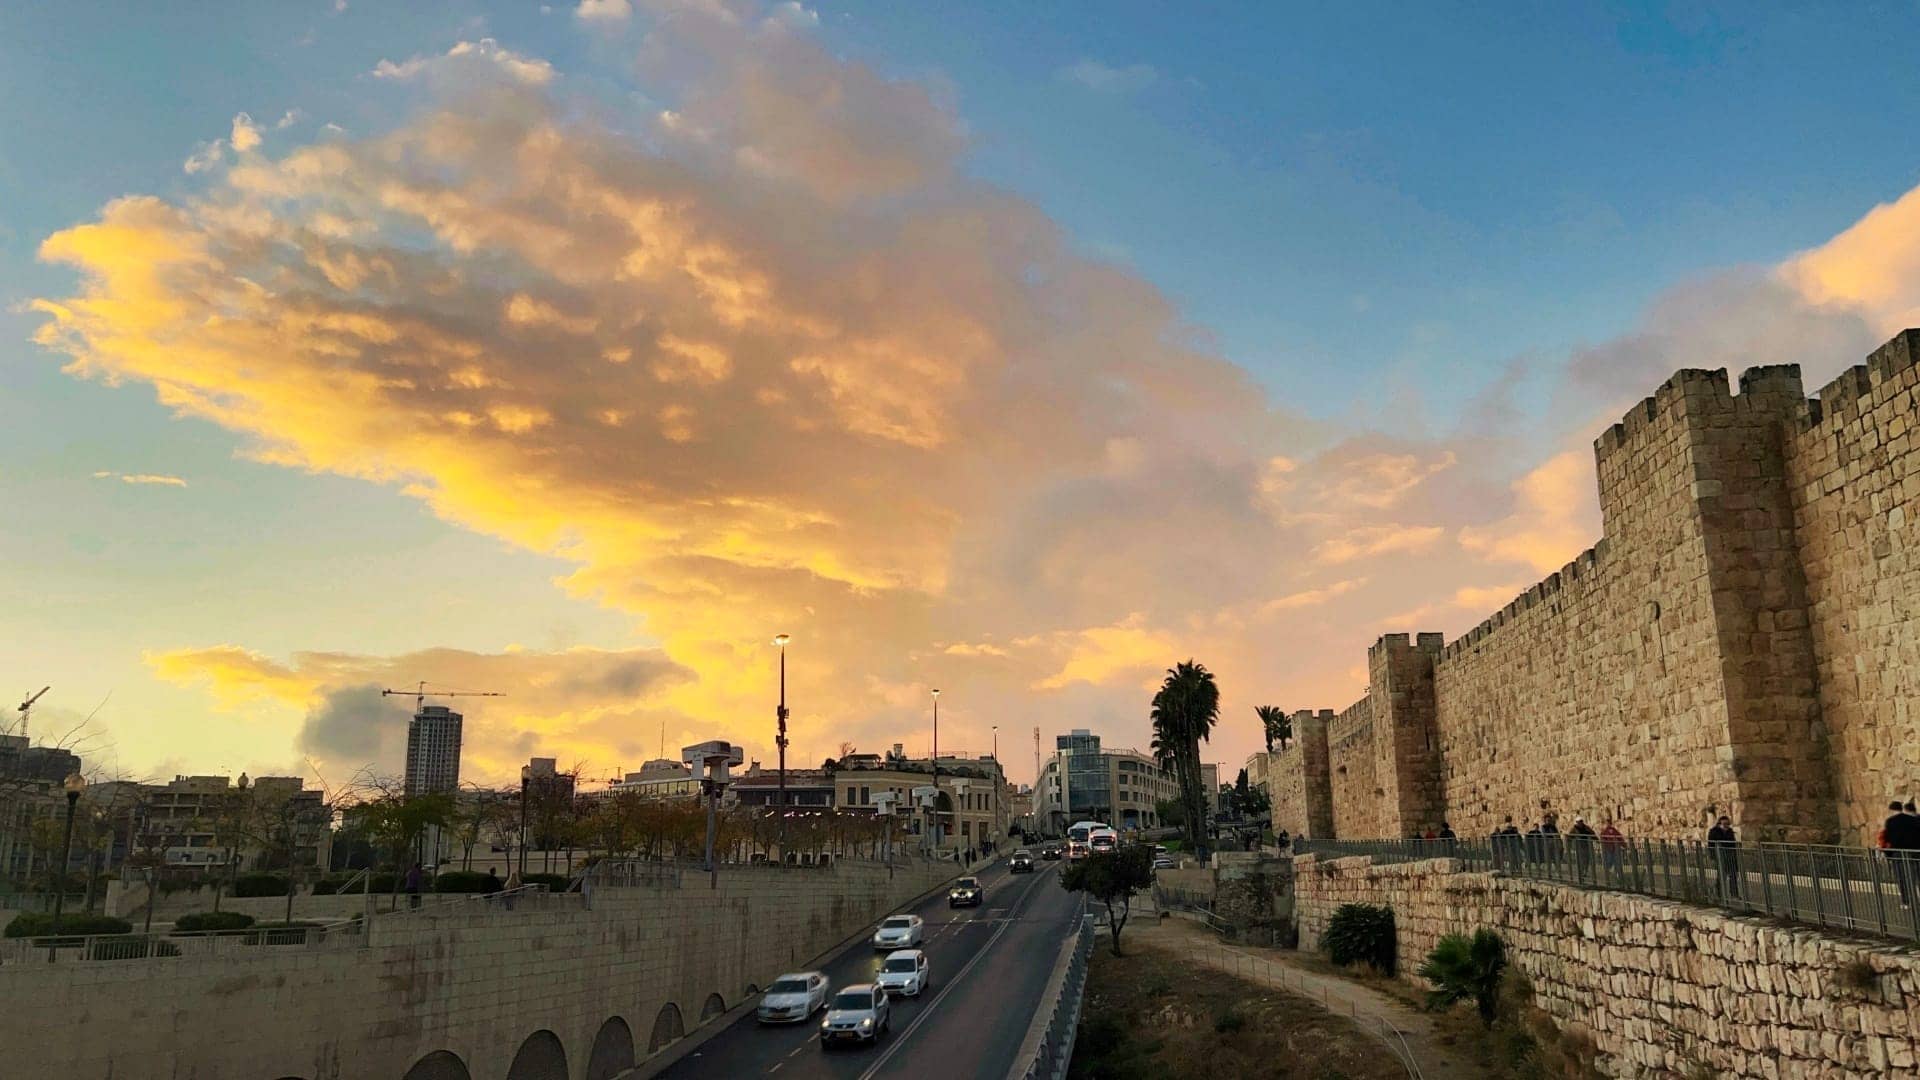 Jerusalem wall